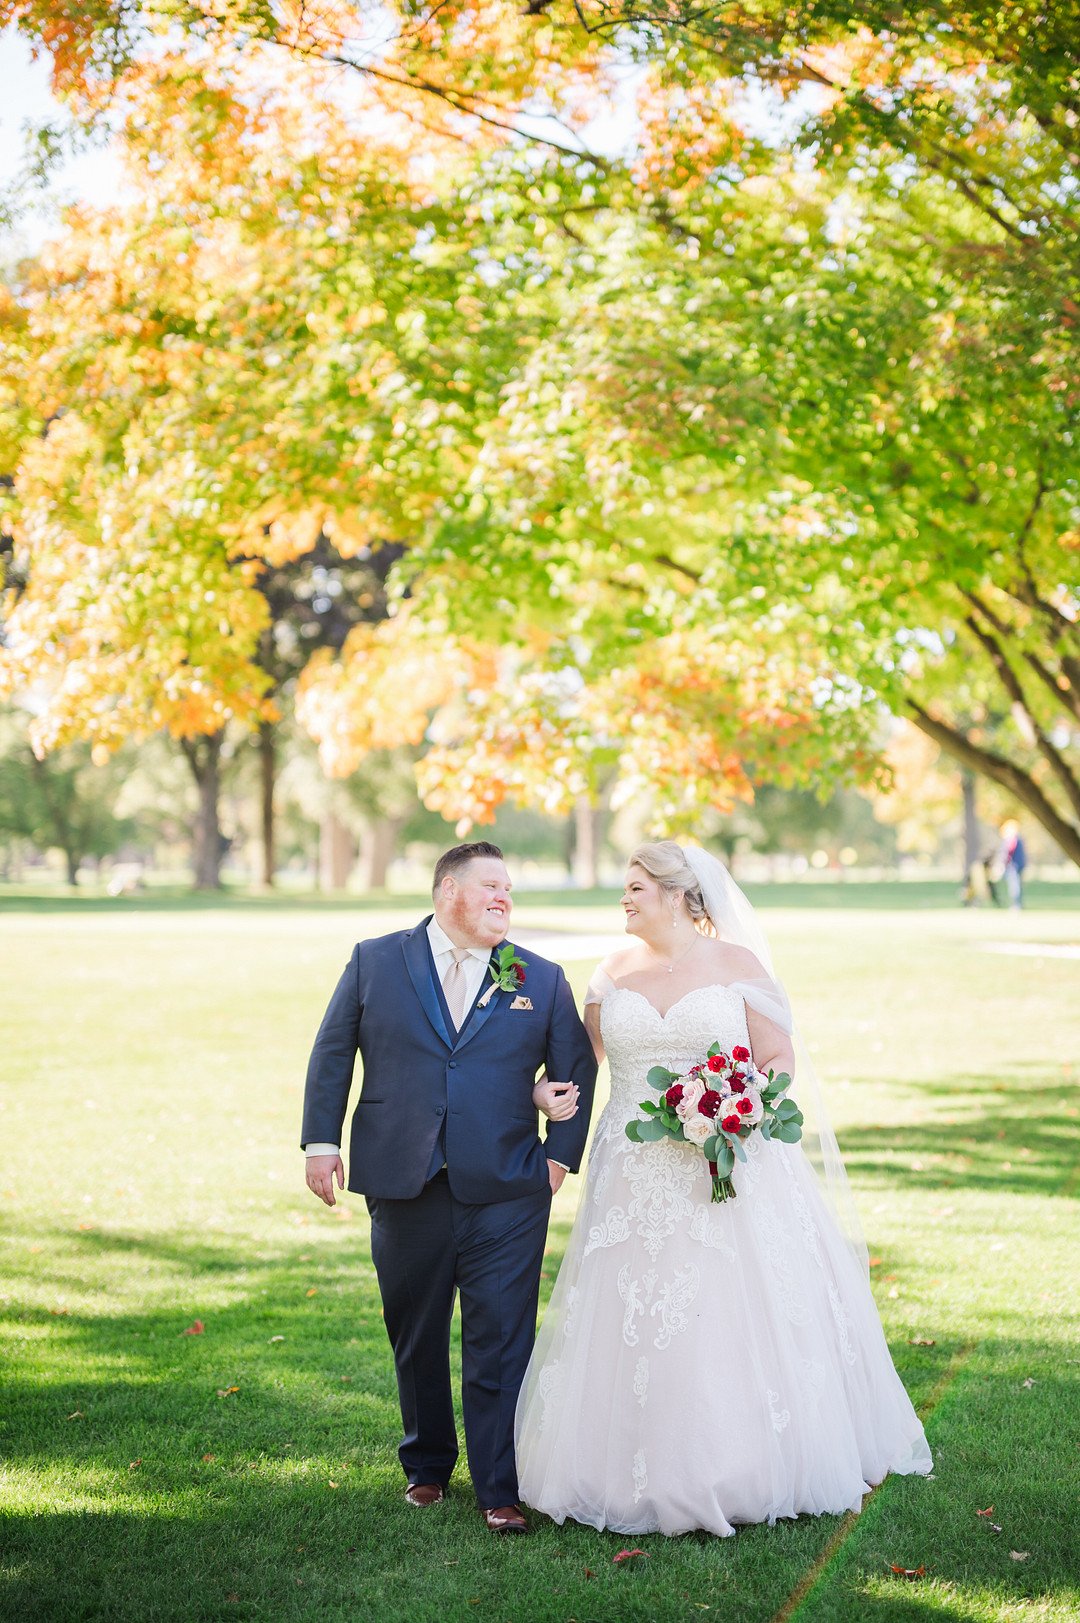 Jackson_Majcher_Winterlyn Photography_Rolling Green Country Club Autumn Wedding-44_low.jpg